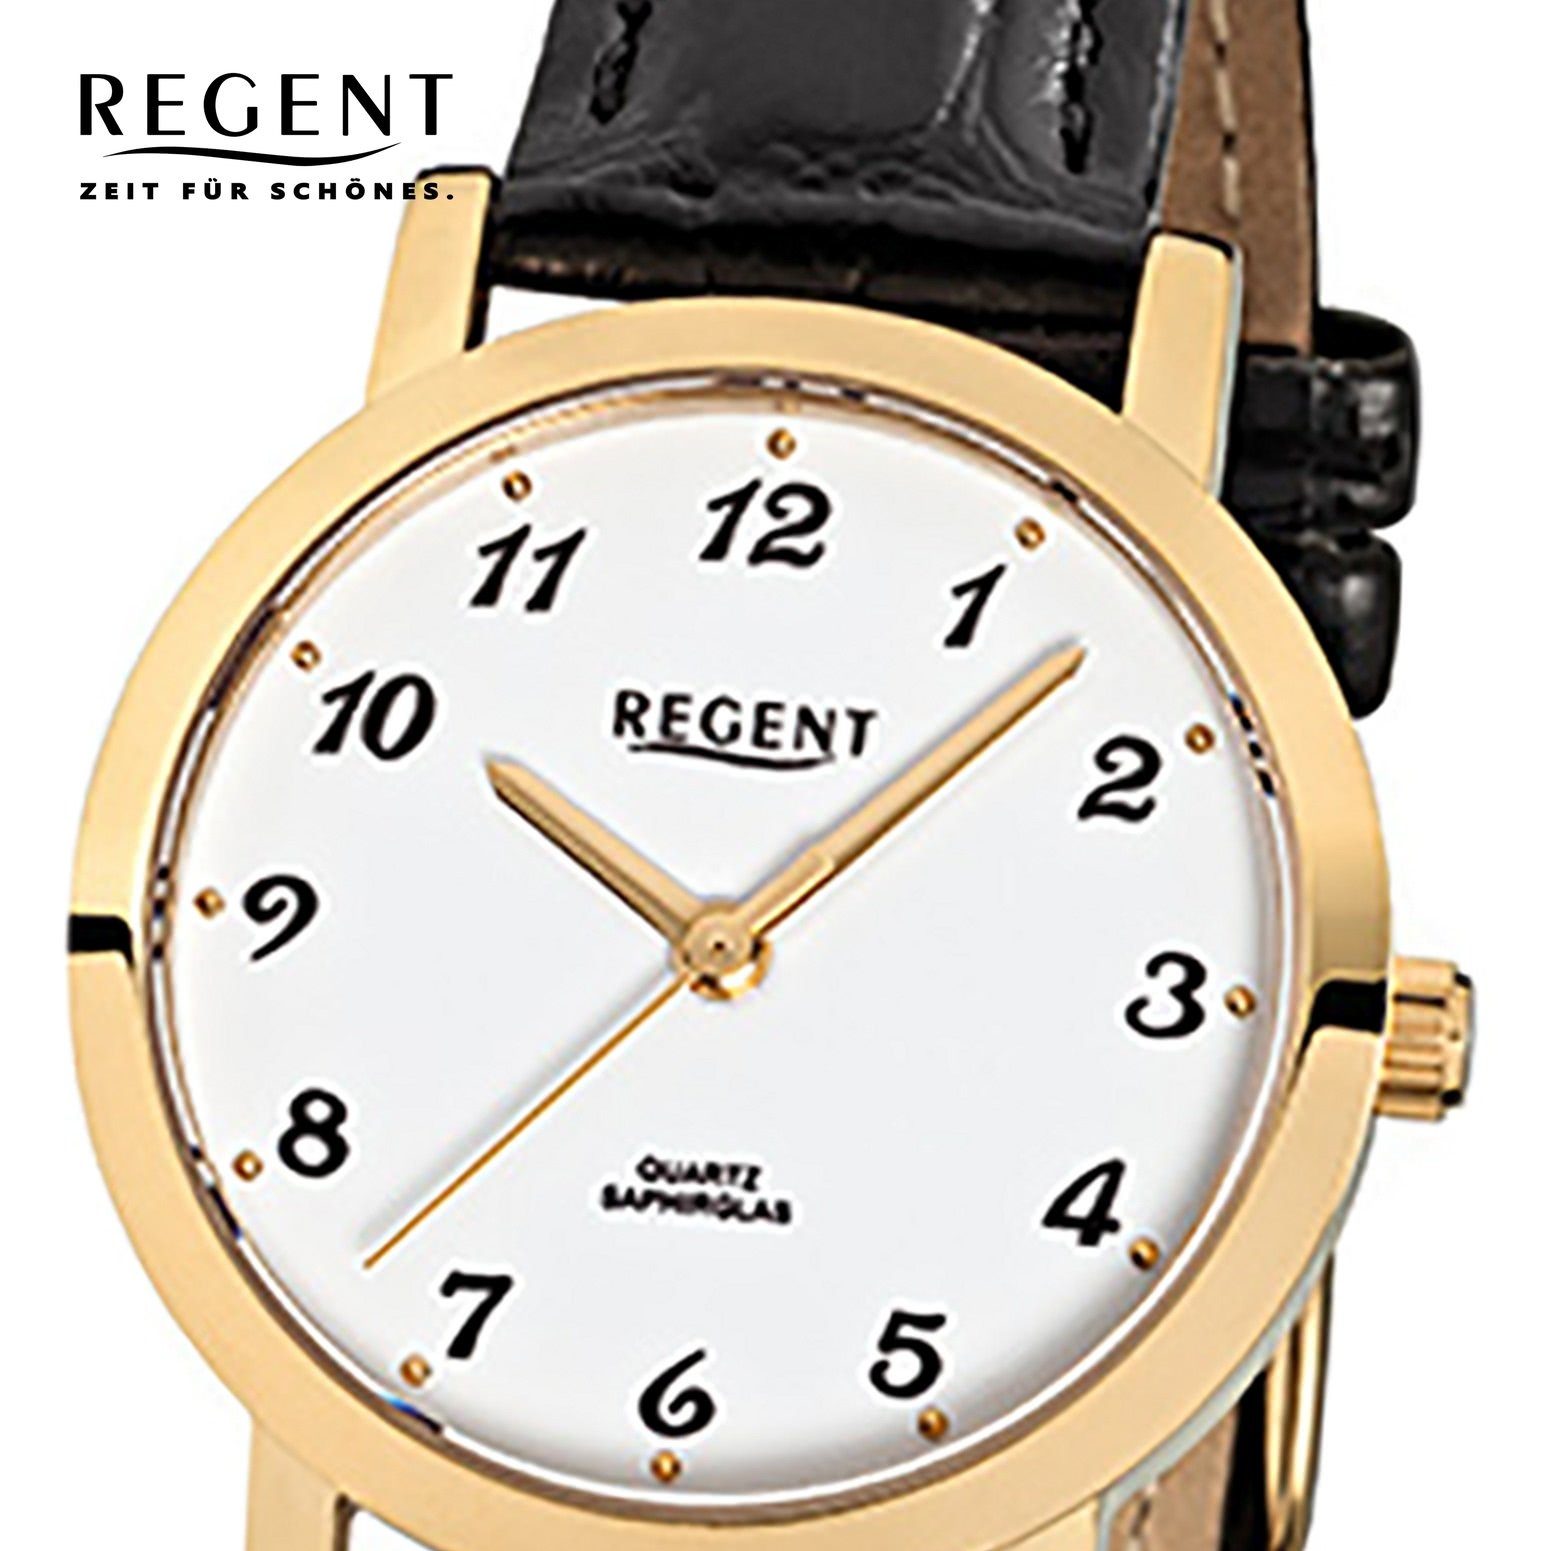 Damen 28mm), Armbanduhr Analog, Lederarmband rund, klein Damen-Armbanduhr Quarzuhr Regent schwarz (ca. Regent